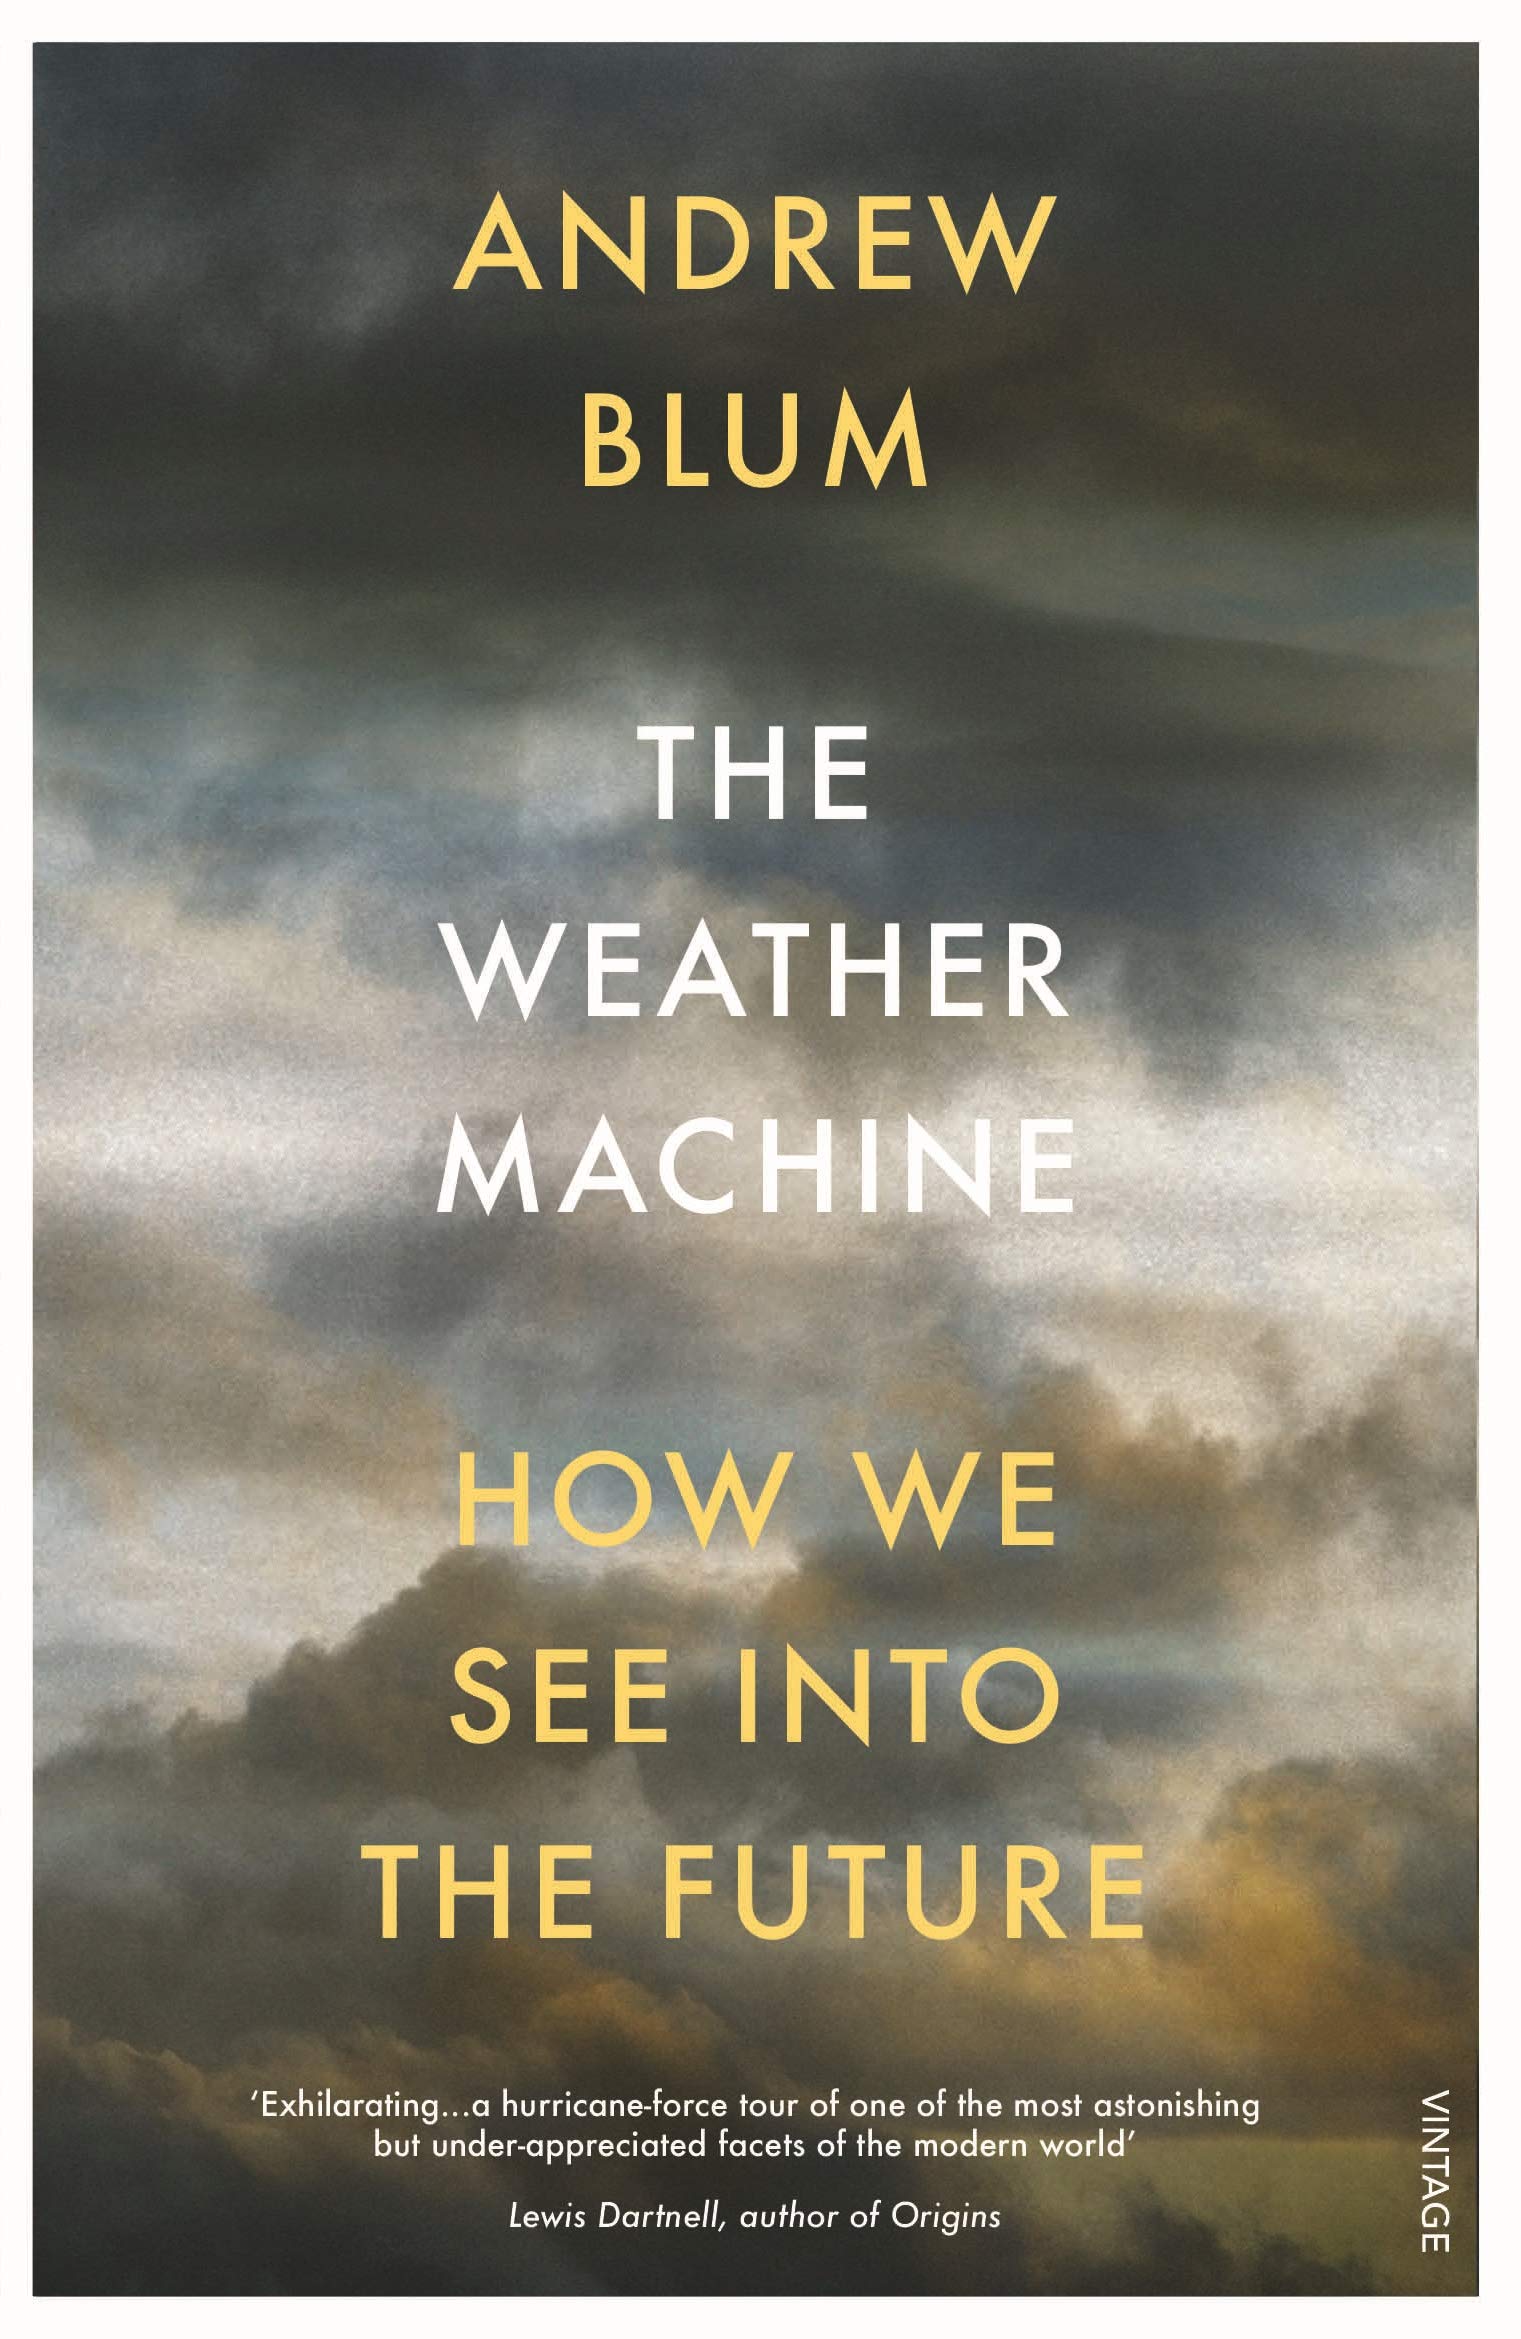 Weather Machine | Andrew Blum image14